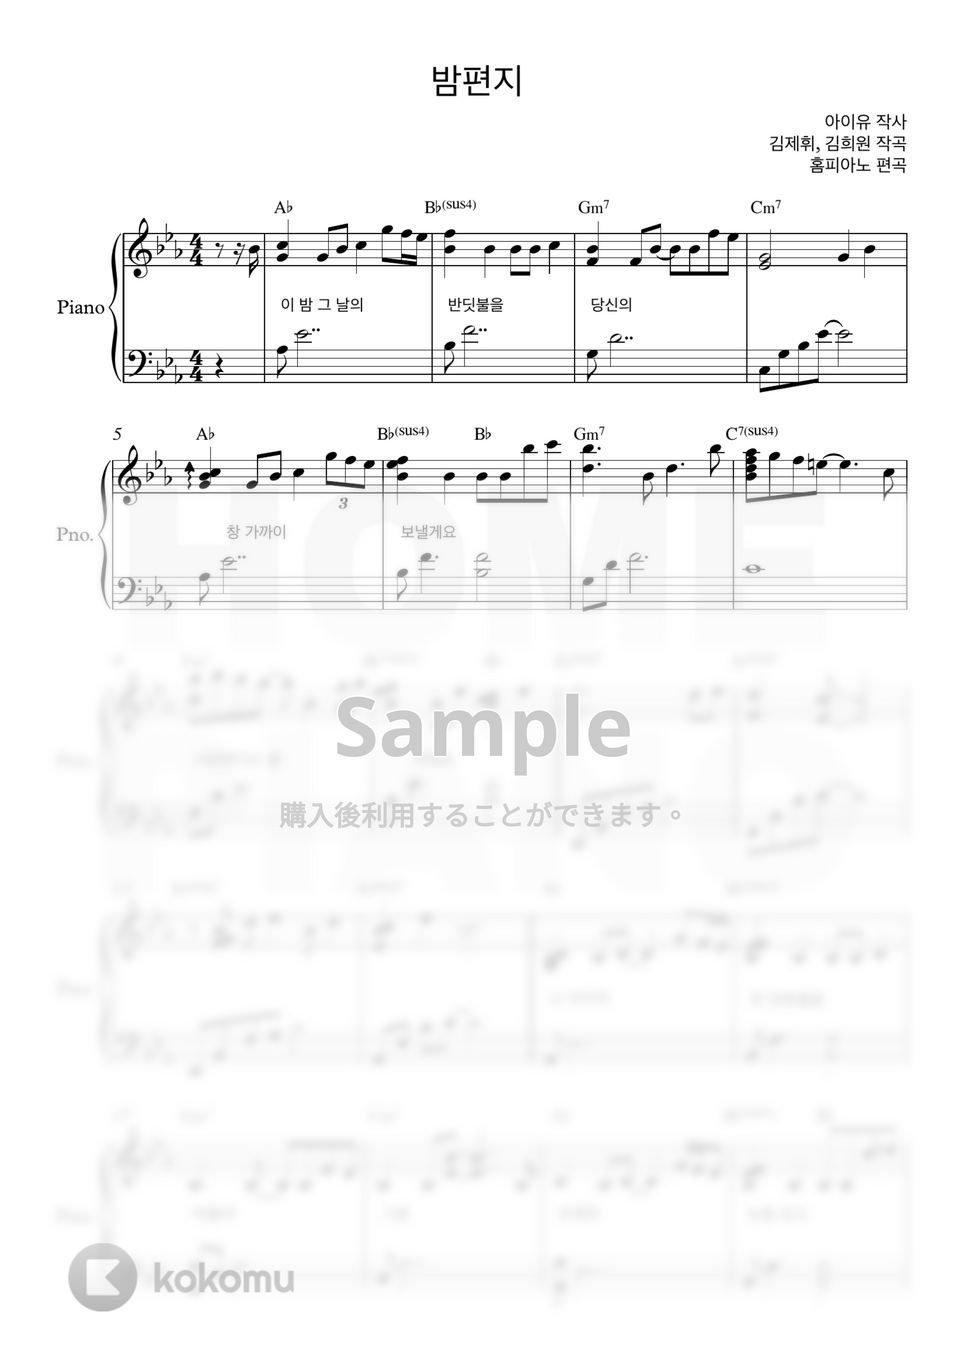 IU - 夜の手紙 (上級) by HOME PIANO